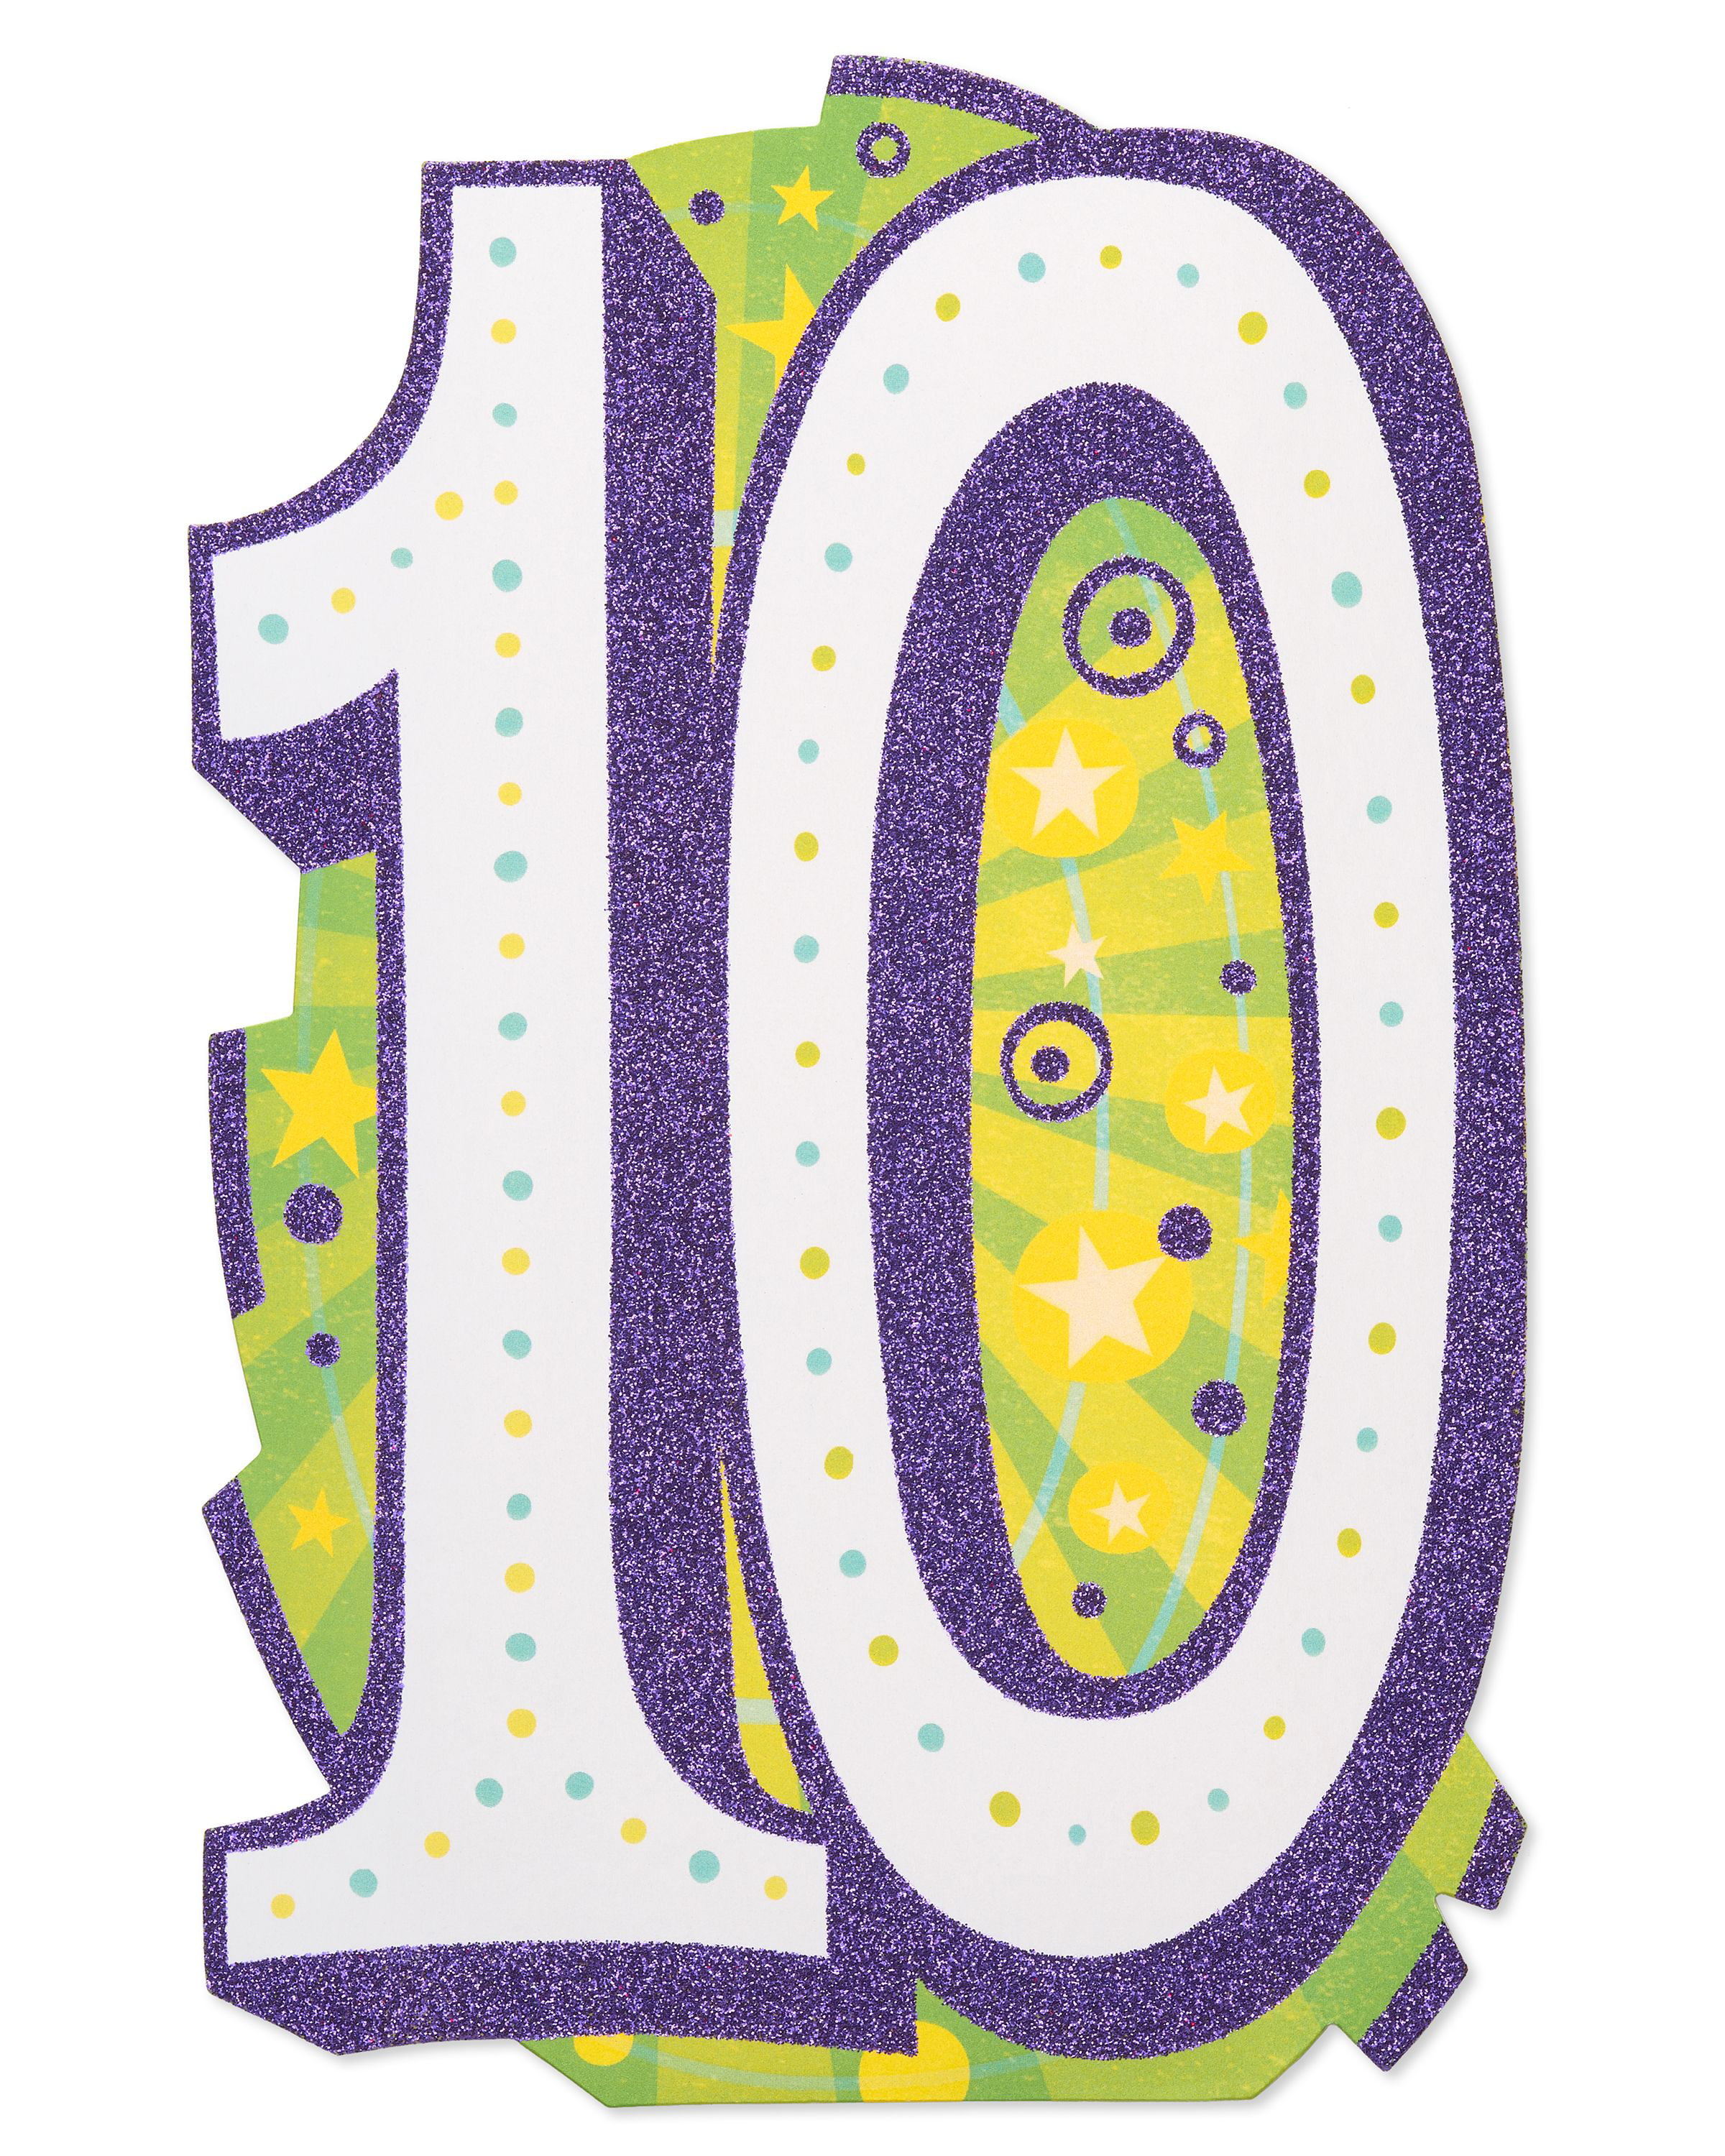 10 Today Happy 10th Birthday Greetings Card Stars Cupcake Lov Glitter Purple Ten 